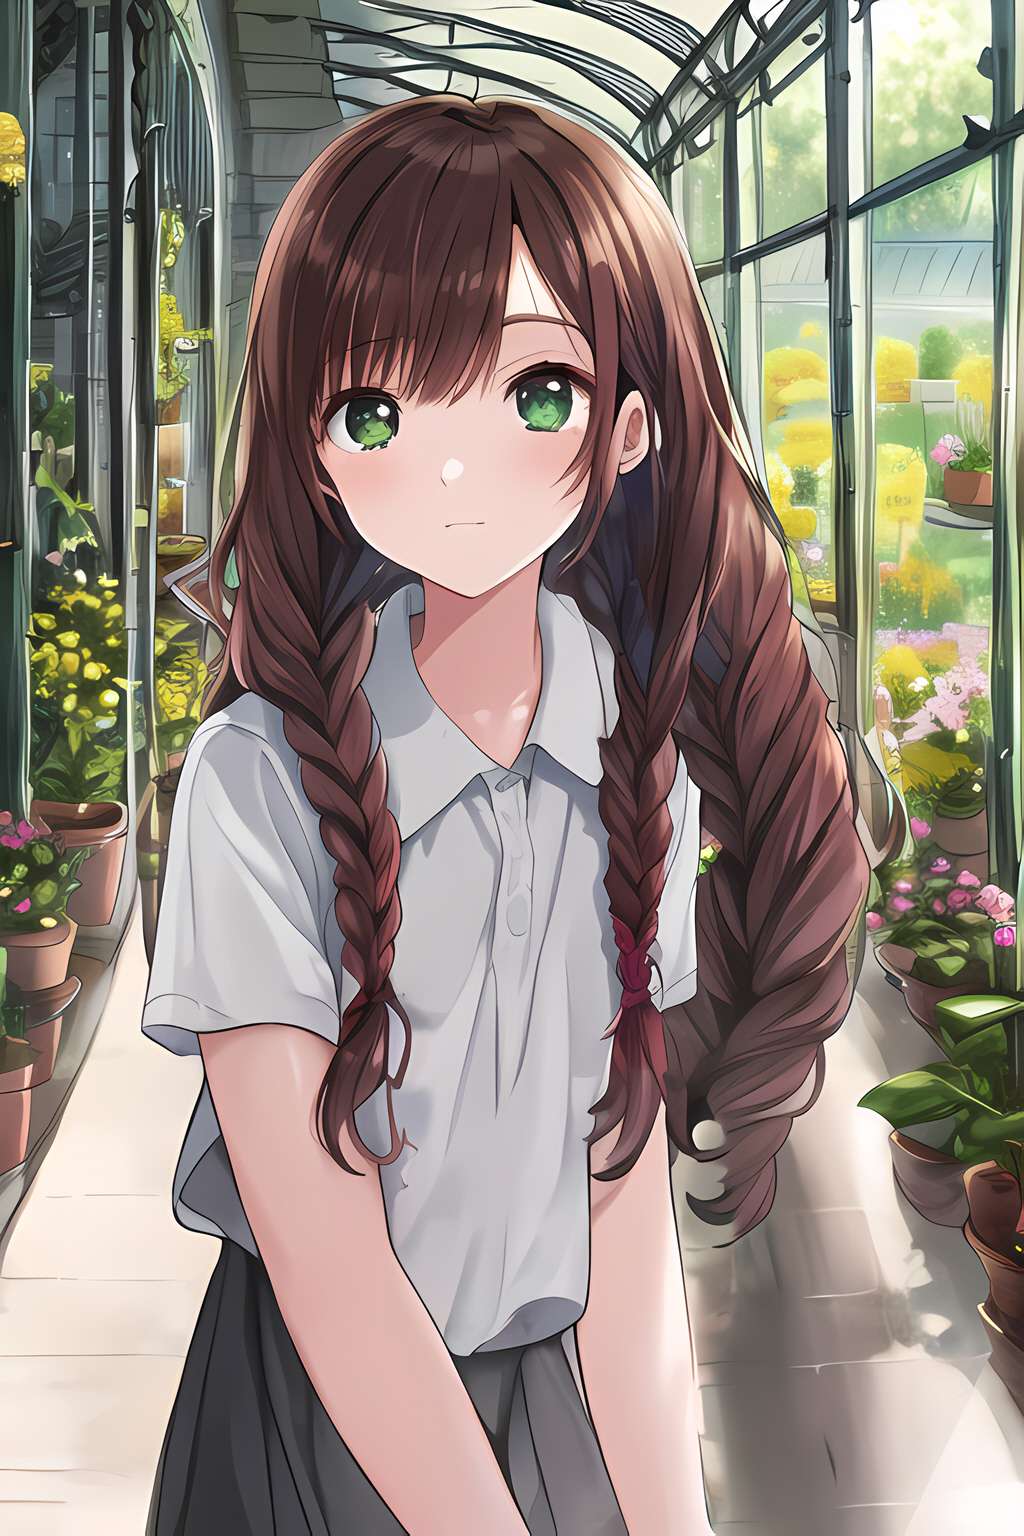 Beautiful Anime kawaii cute fantasy Girl by SianWorld on DeviantArt